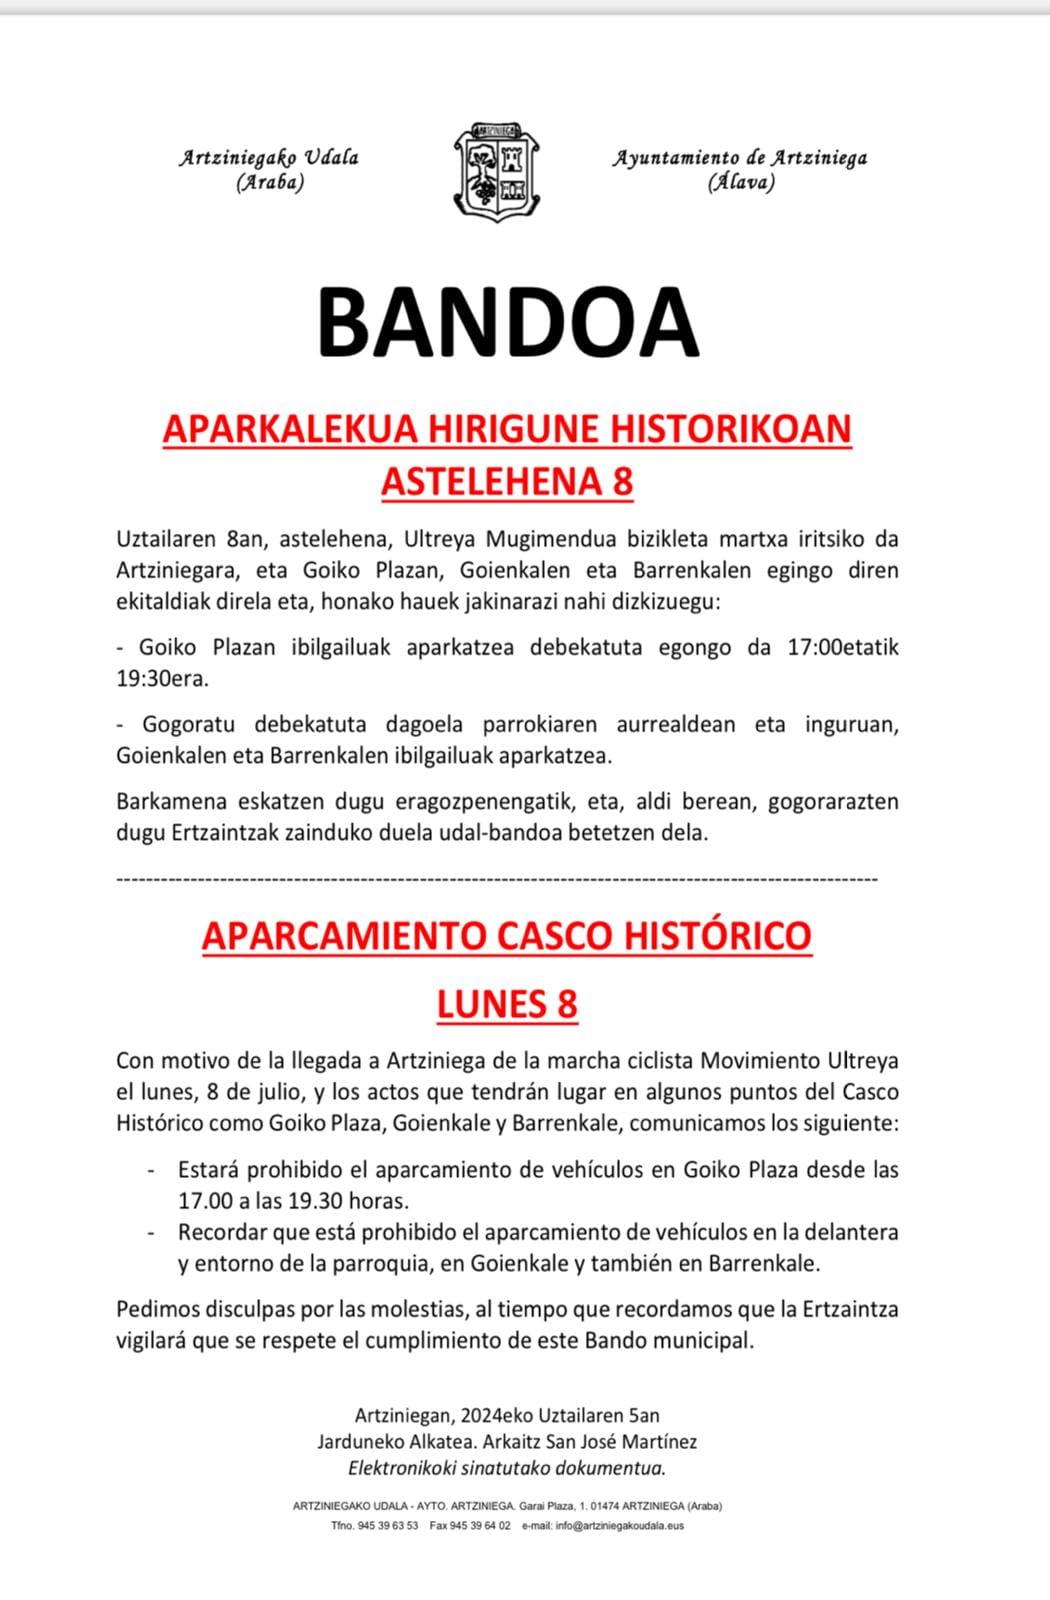 BANDO: APARCAMIENTO CASCO HISTÓRICO LUNES 8